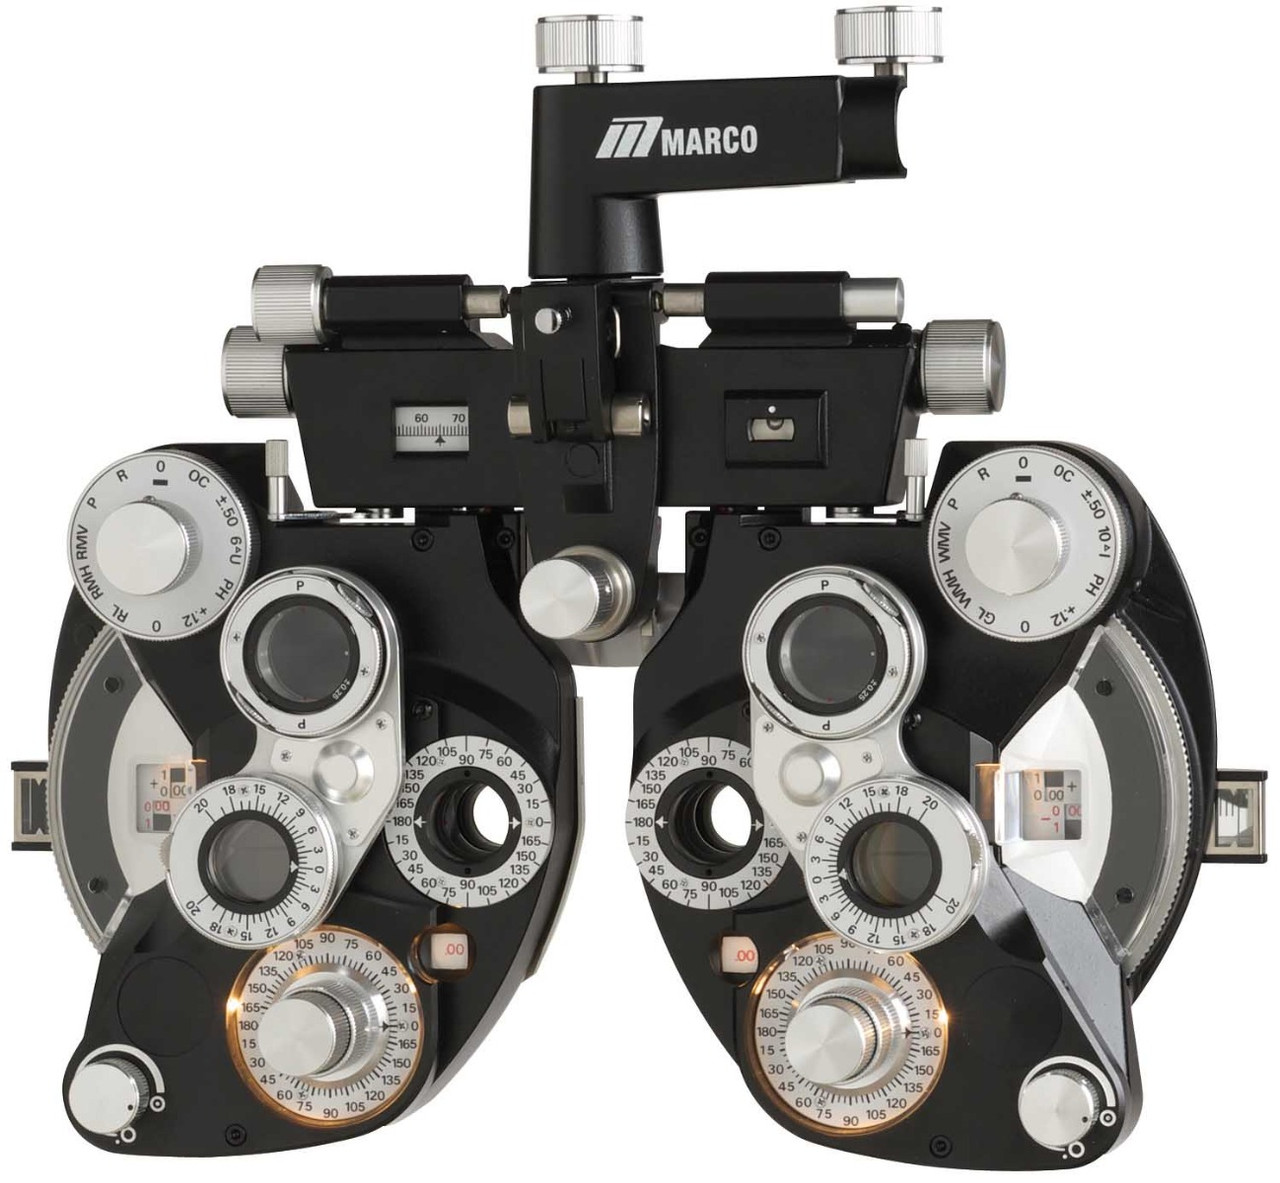 Marco RT-700 Illuminated Manual Refractor